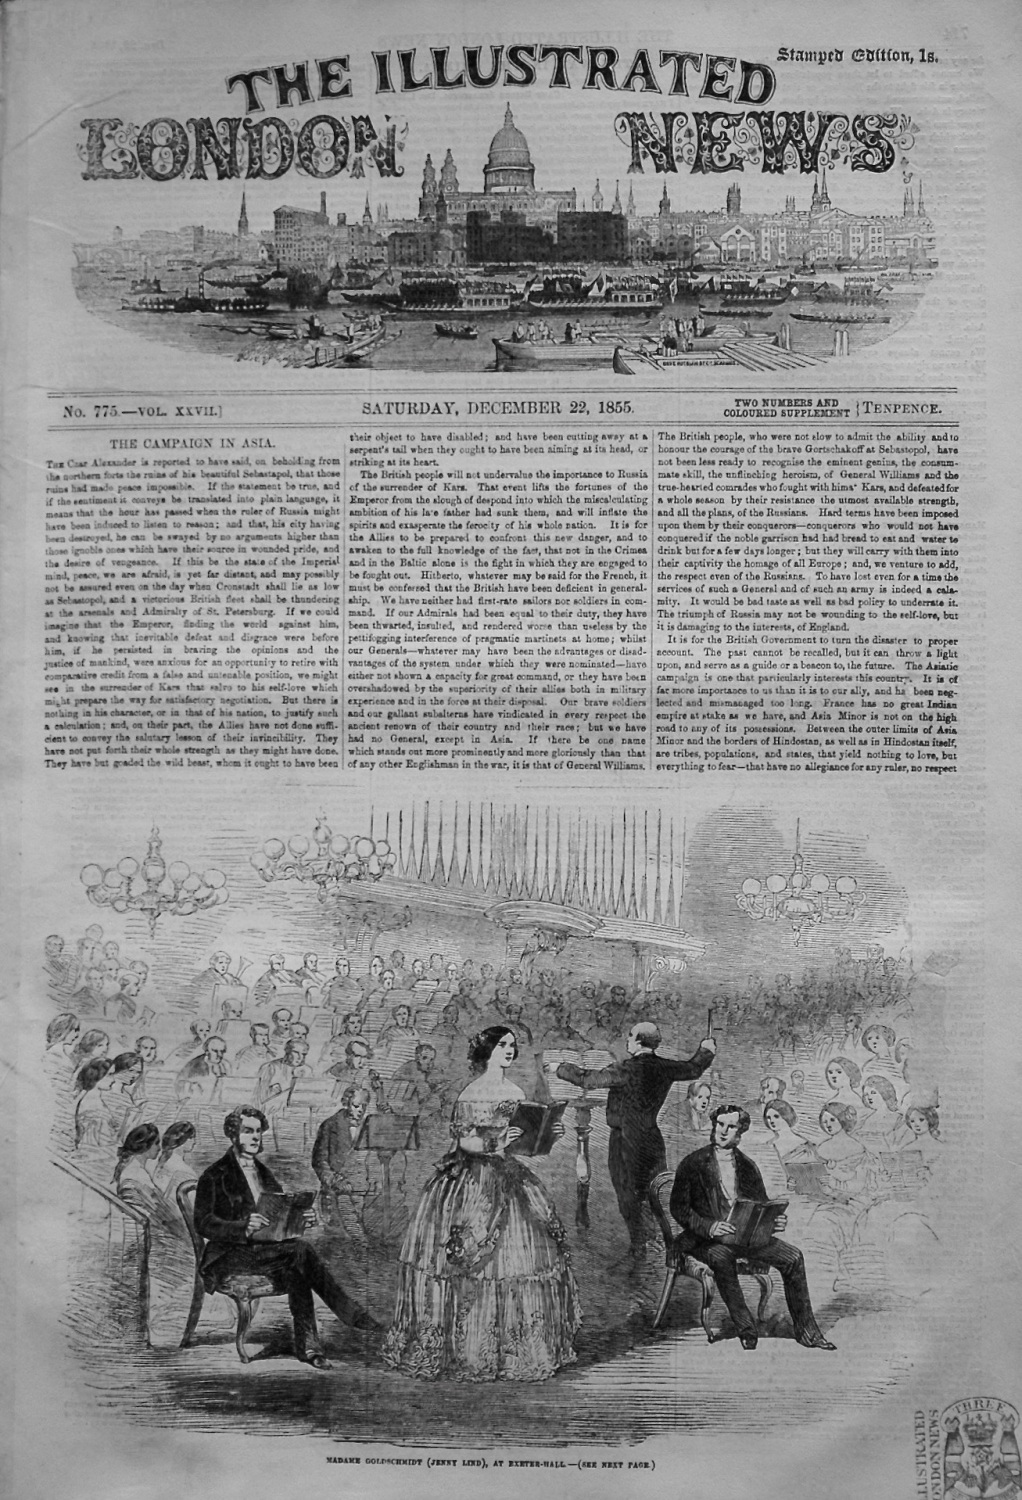 Illustrated London News. December 22nd, 1855